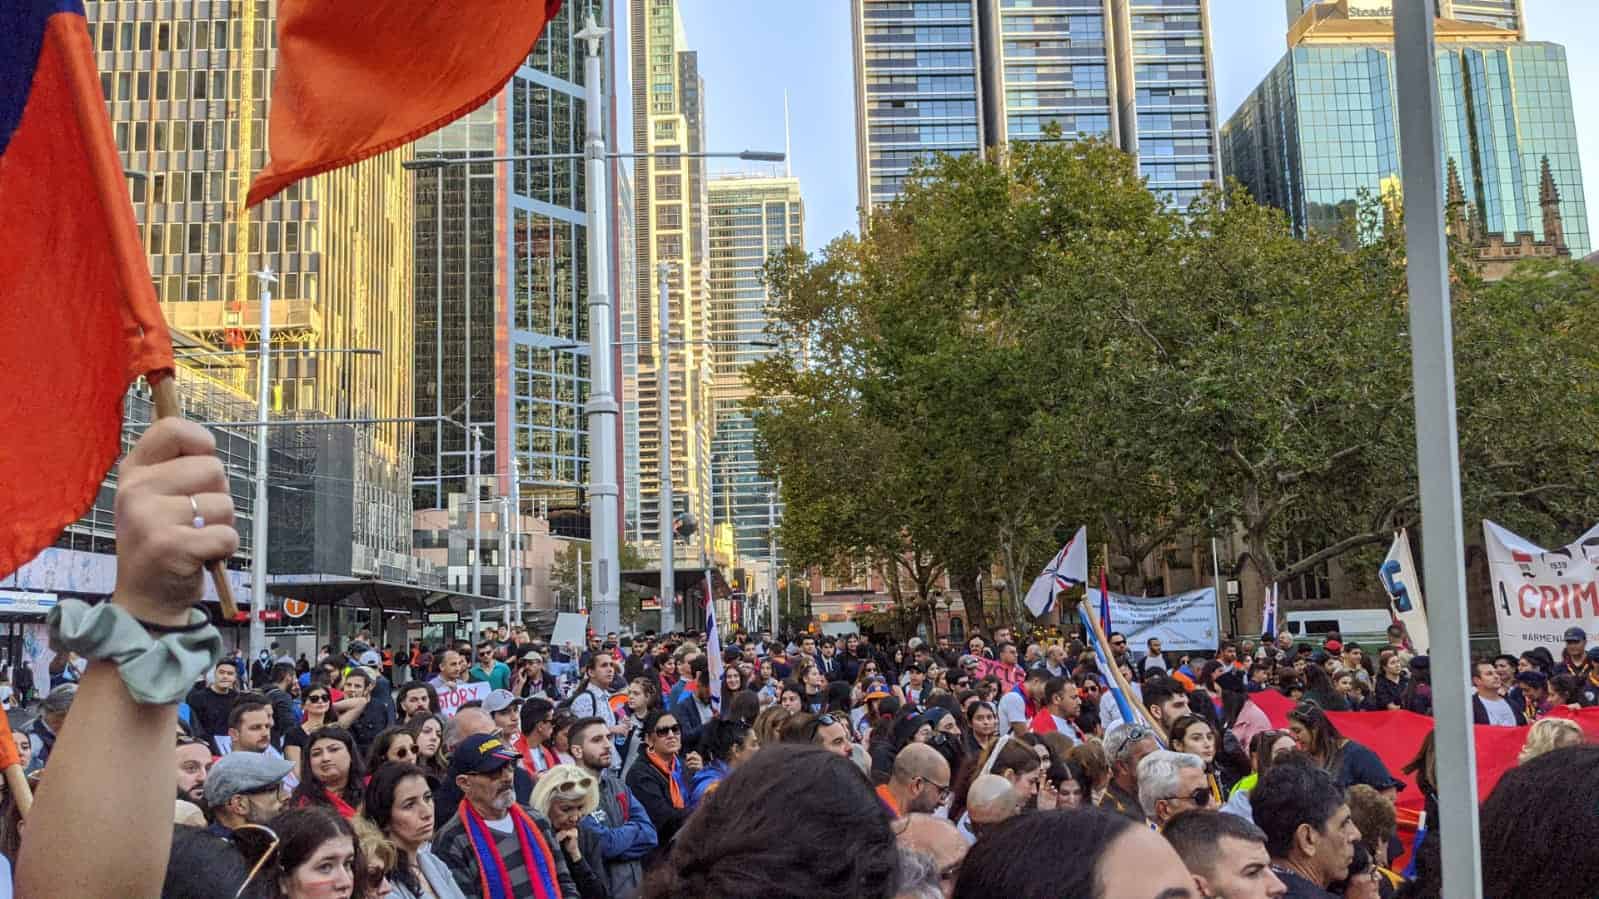 Greek, Armenian, Assyrian genocide rally in Sydney, Australia - April 24, 2021.